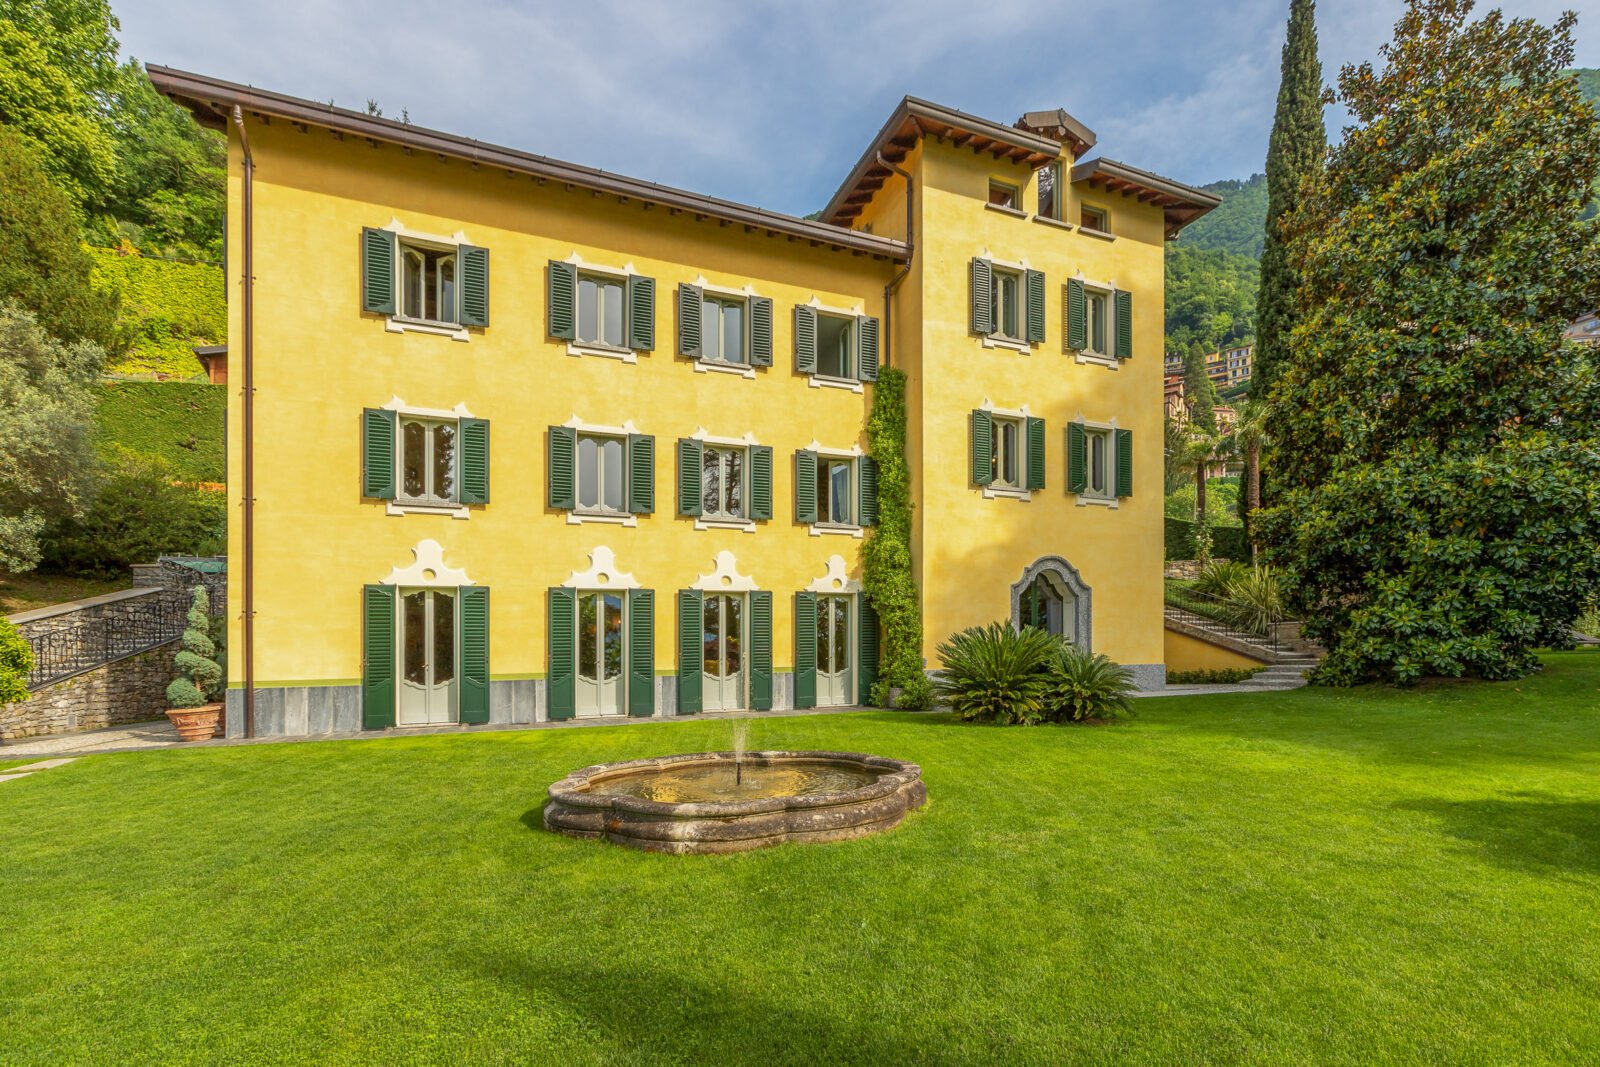 Francis York Waterfront Villa on Lake Como, Italy5.jpg